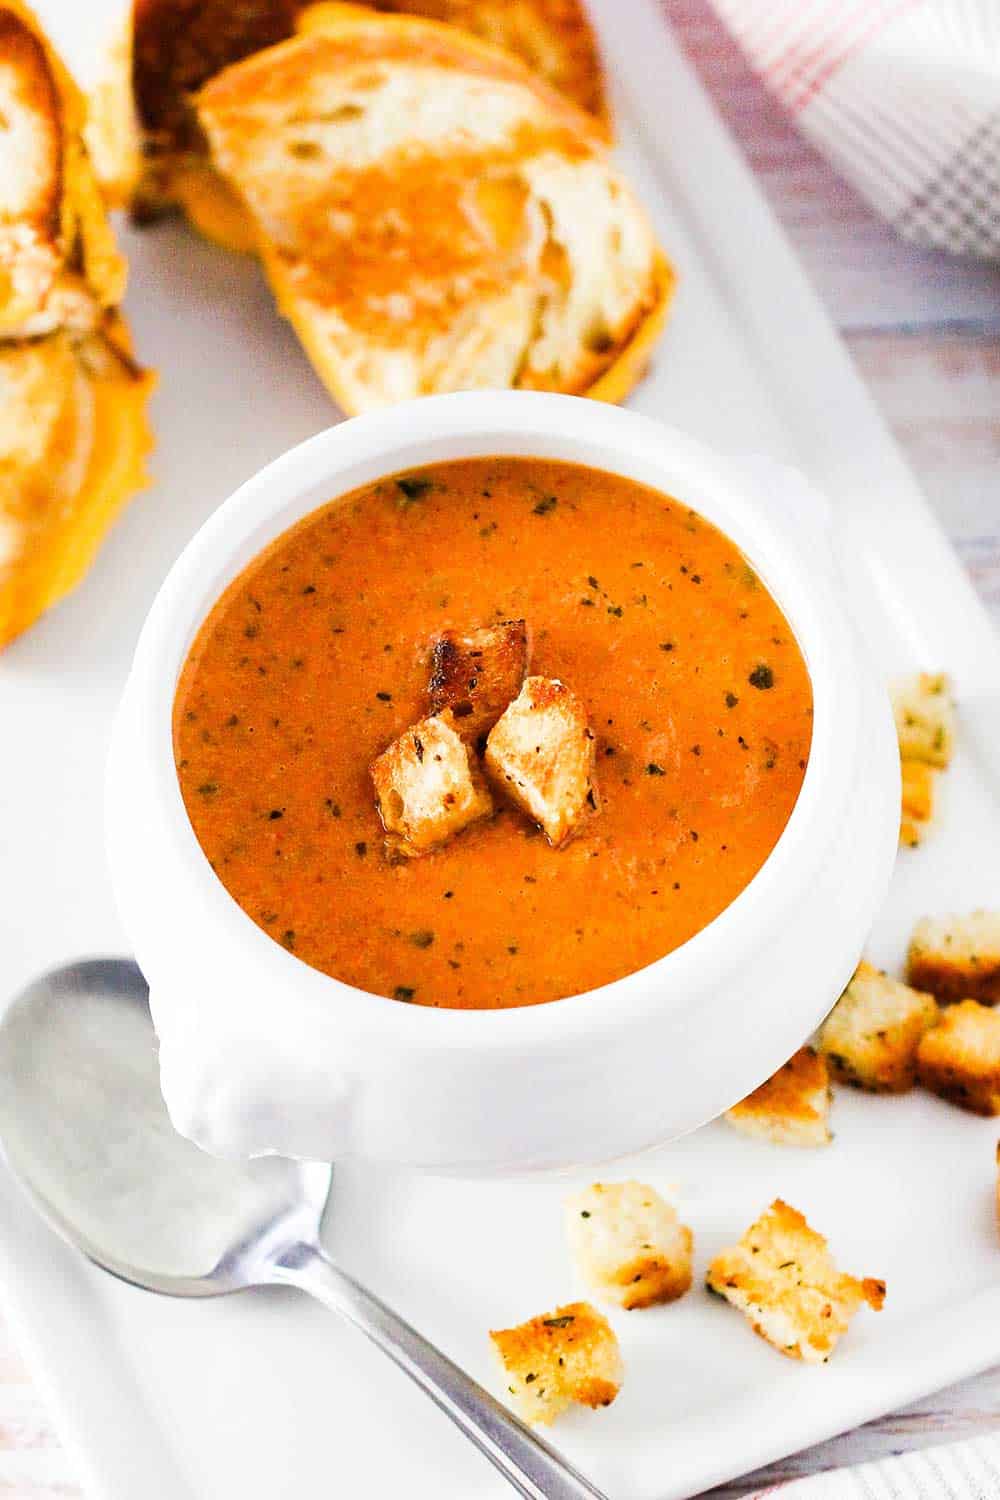 Roasted Tomato Basil Soup Recipe